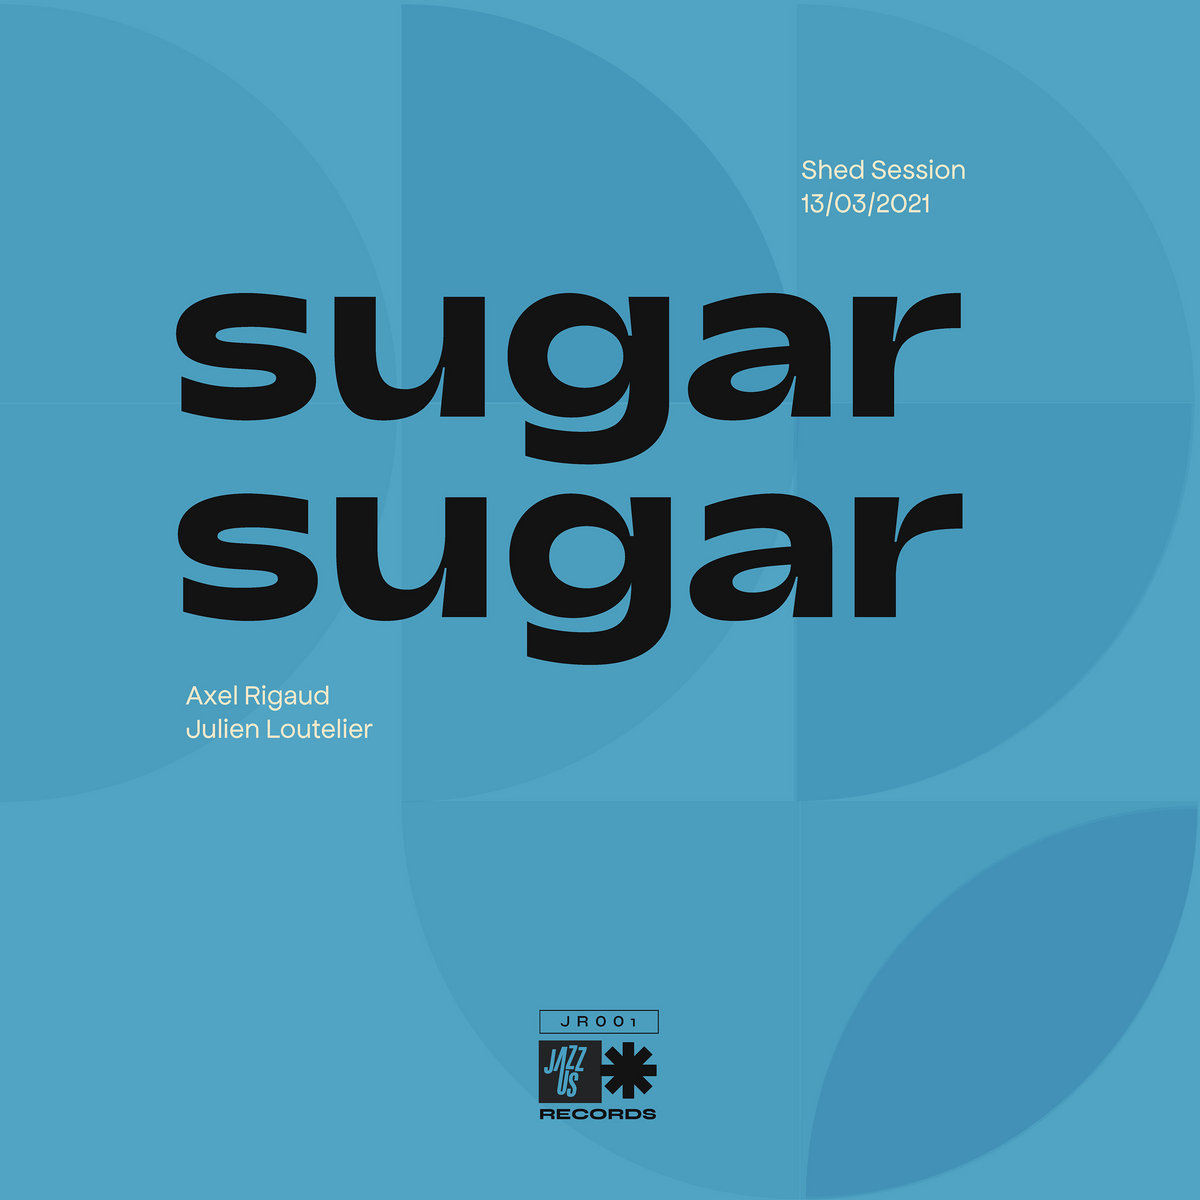 Shed Session par Sugar Sugar